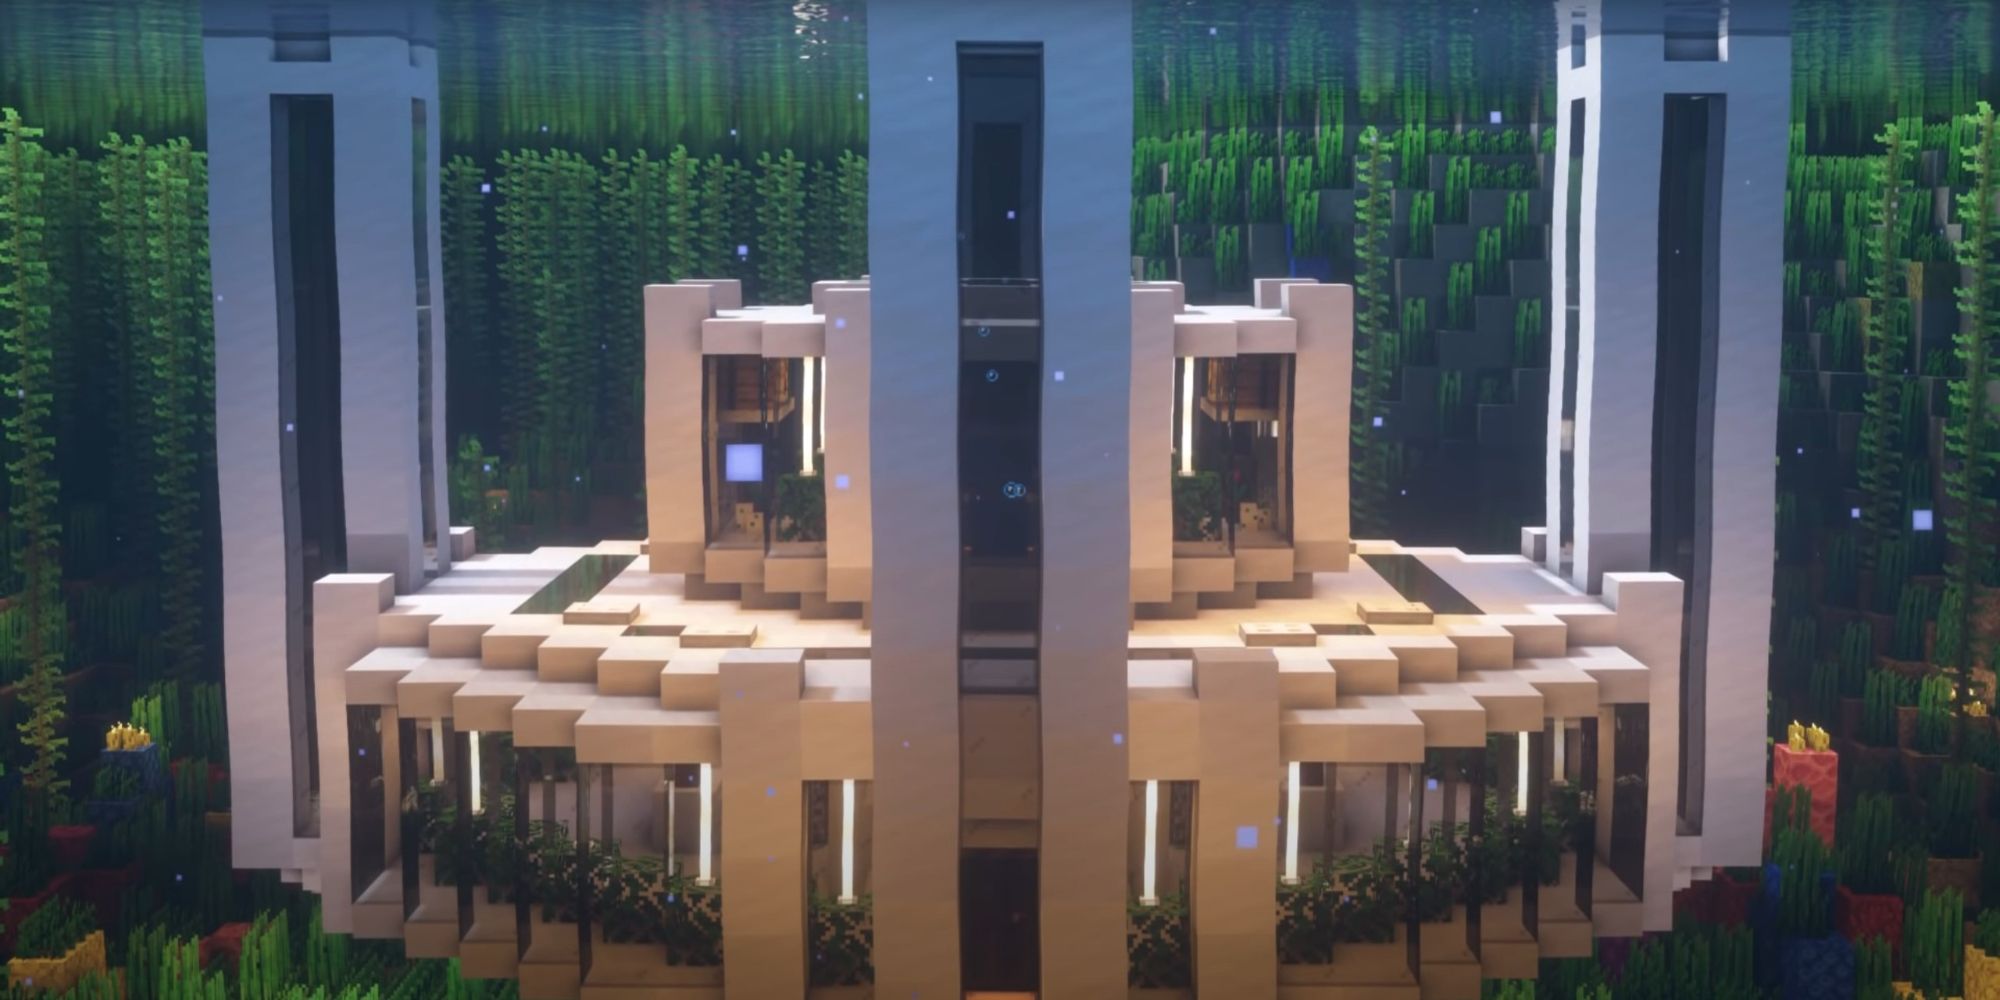 An image from Minecraft of a modern home built underwater using quartz blocks.